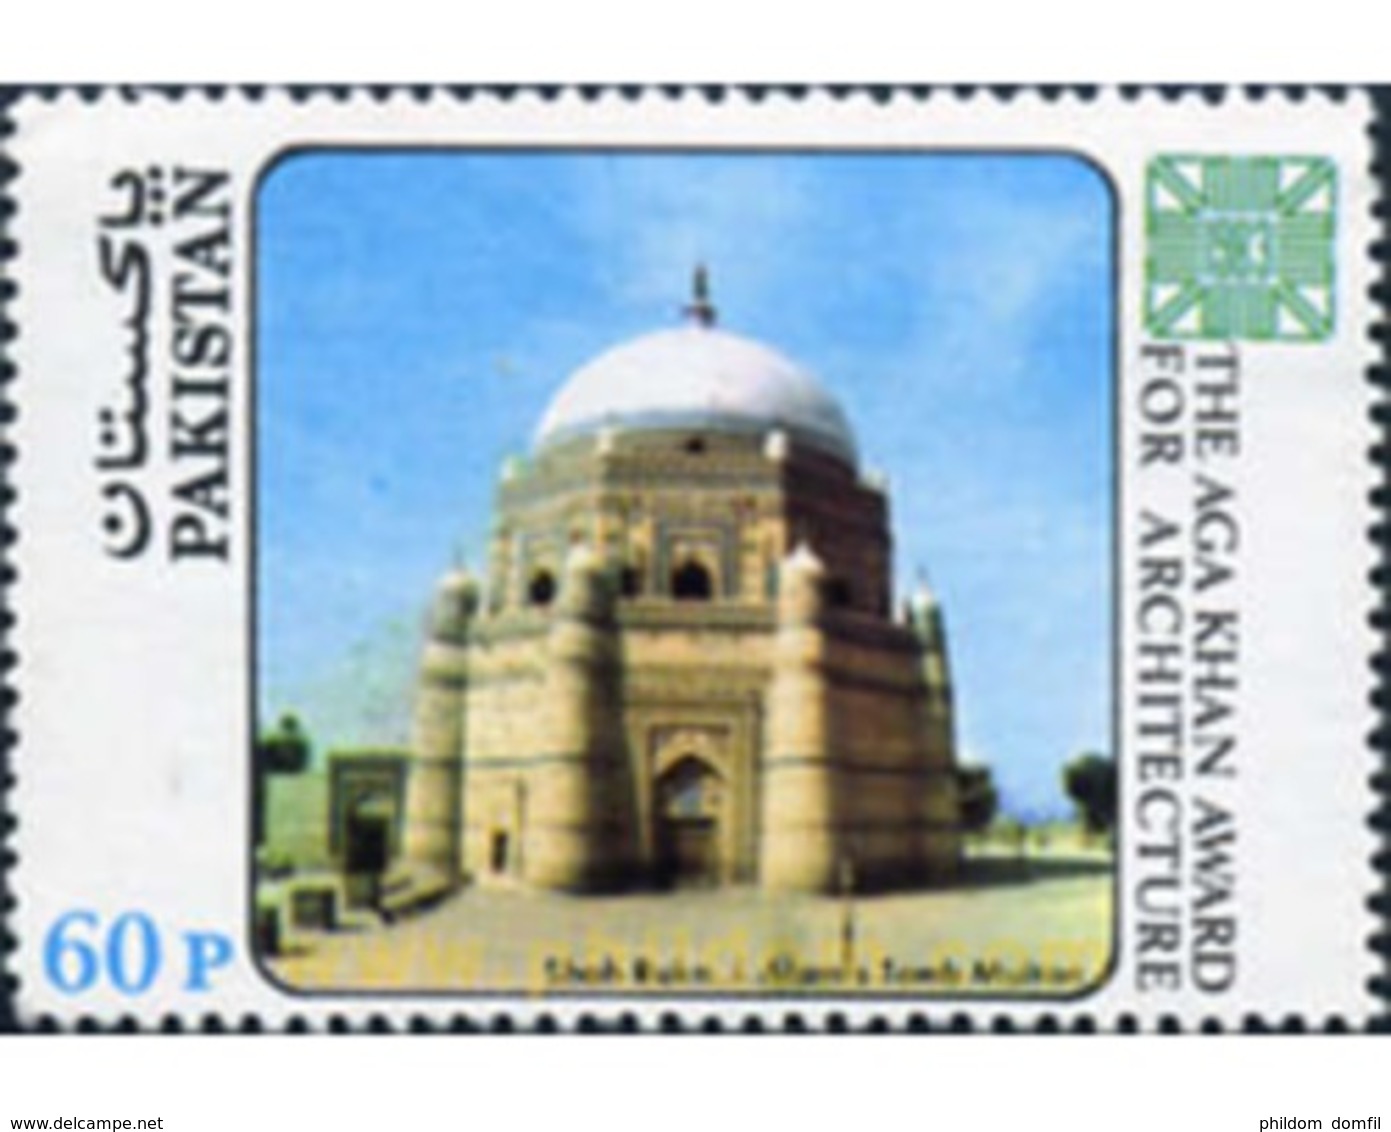 Ref. 349262 * MNH * - PAKISTAN. 1984. PREMIO DE ARQUITECTURA AGA KHAN - Pakistán